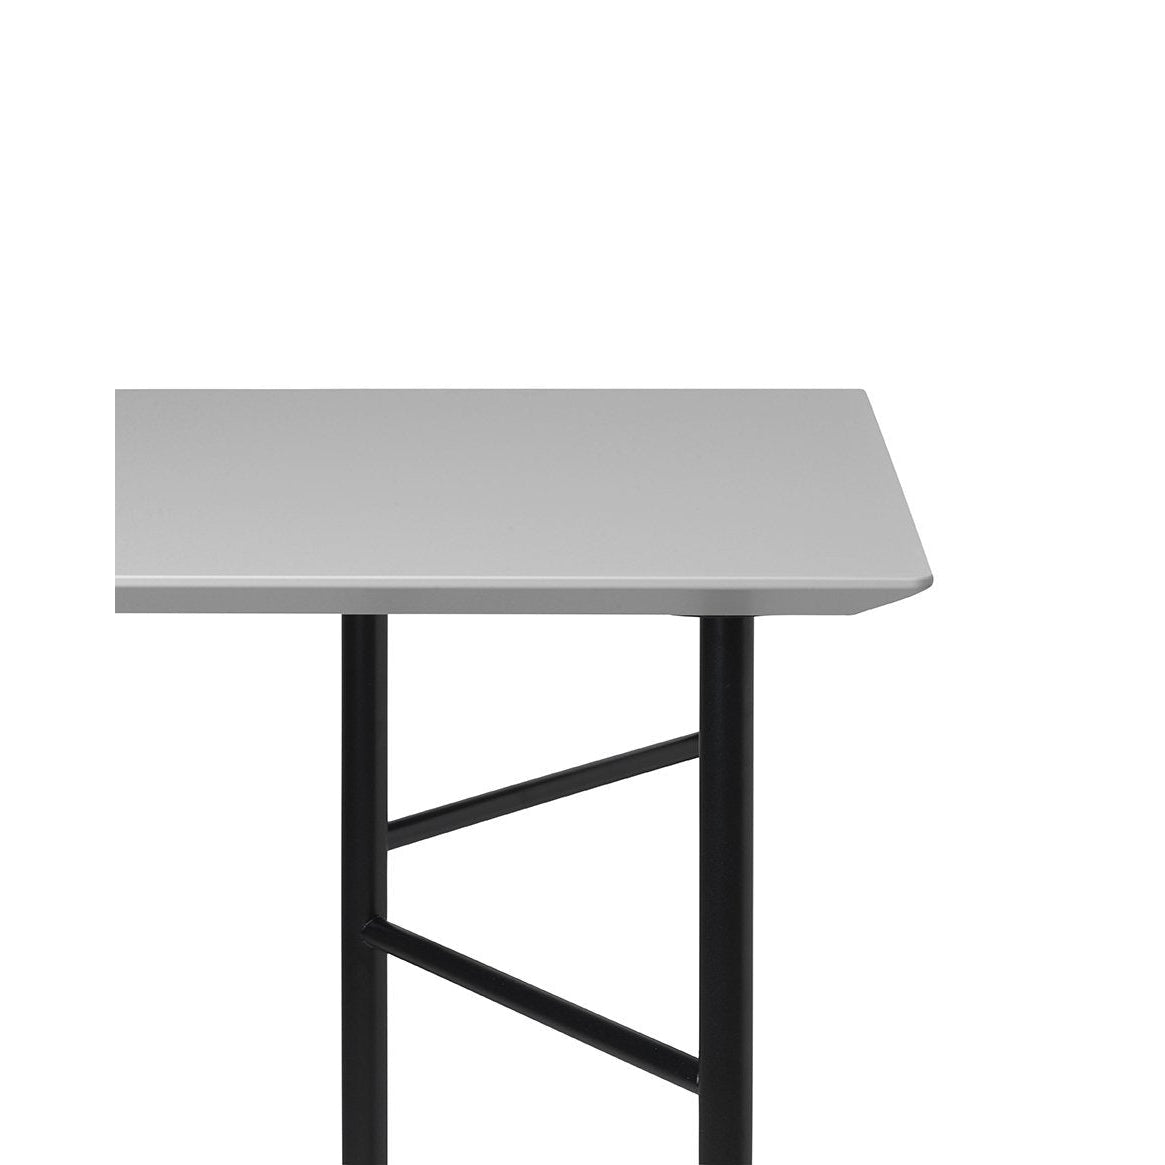 Ferm Living Mingle Desk Top, Light Grey, 135 Cm